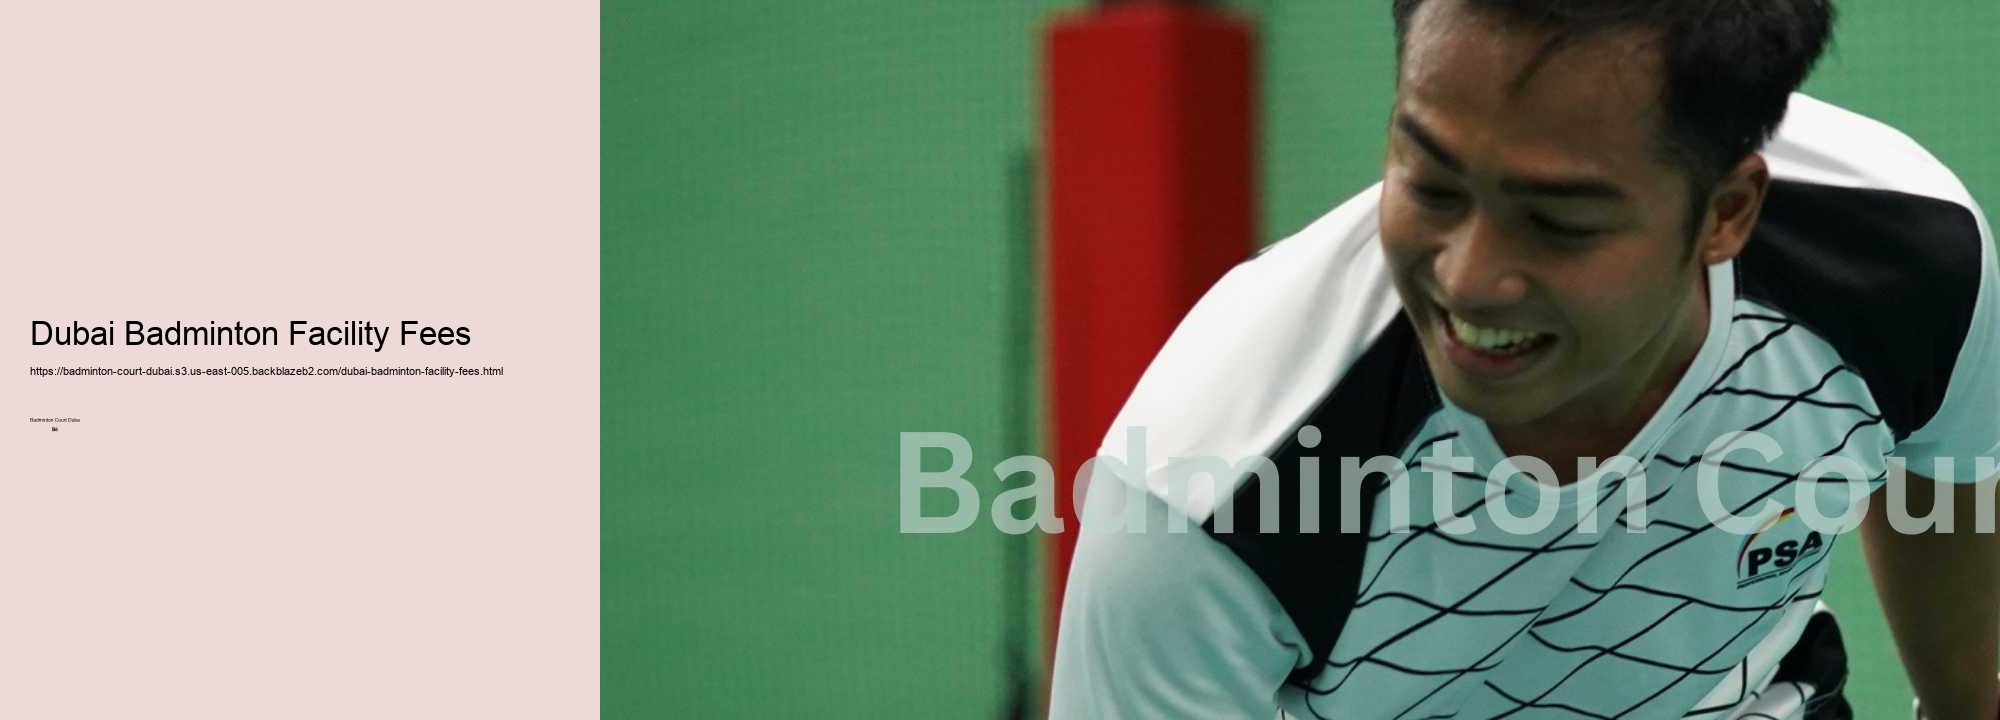 Dubai Badminton Facility Fees